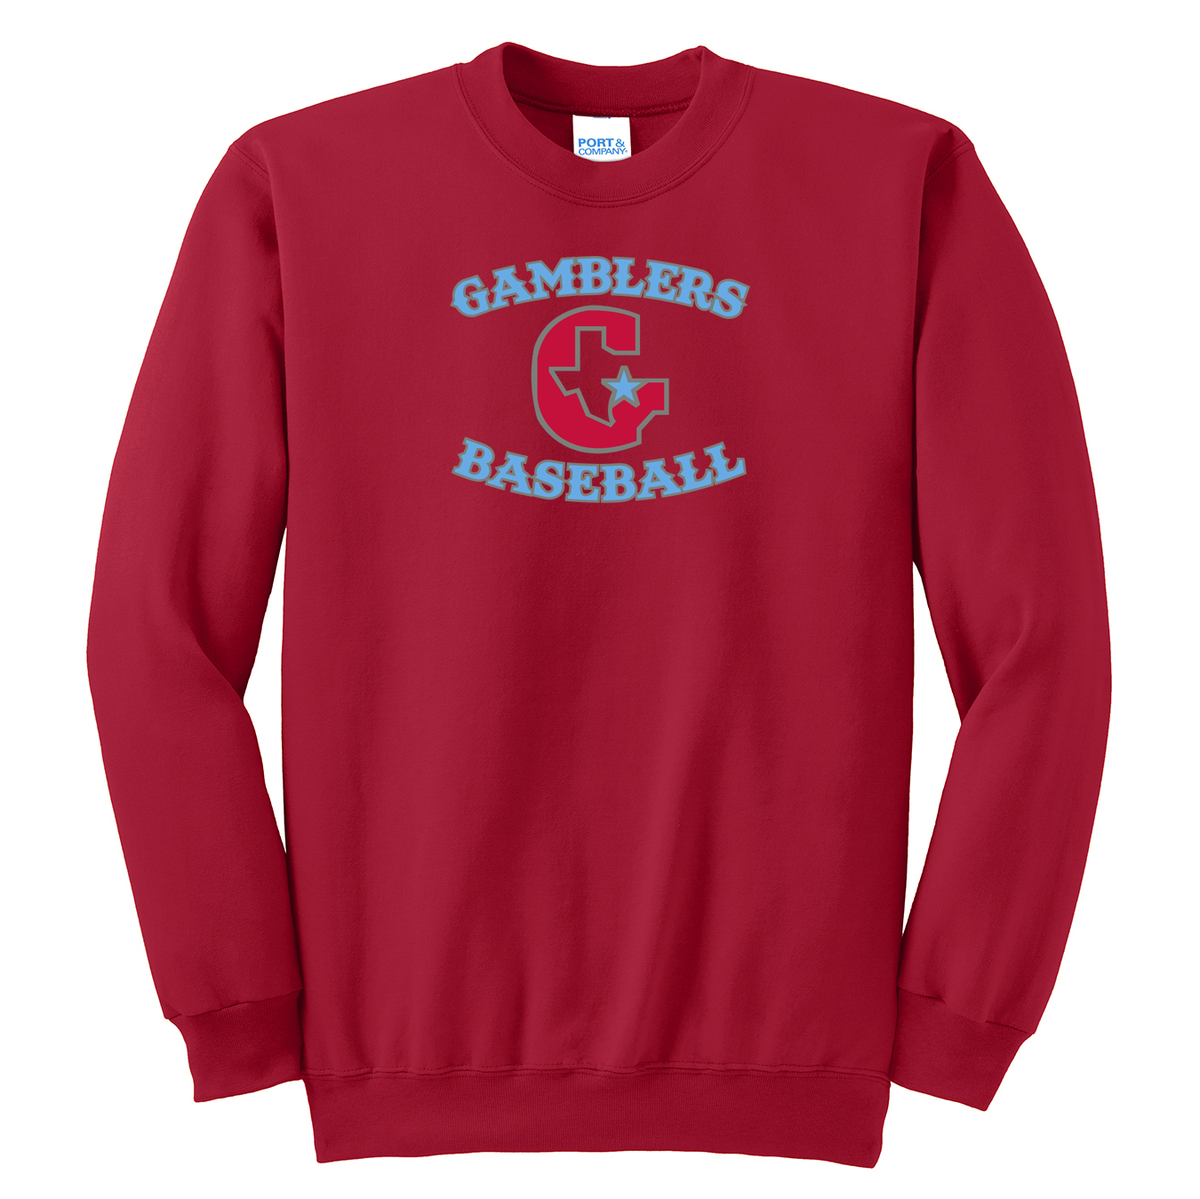 Gamblers Baseball  Crew Neck Sweater